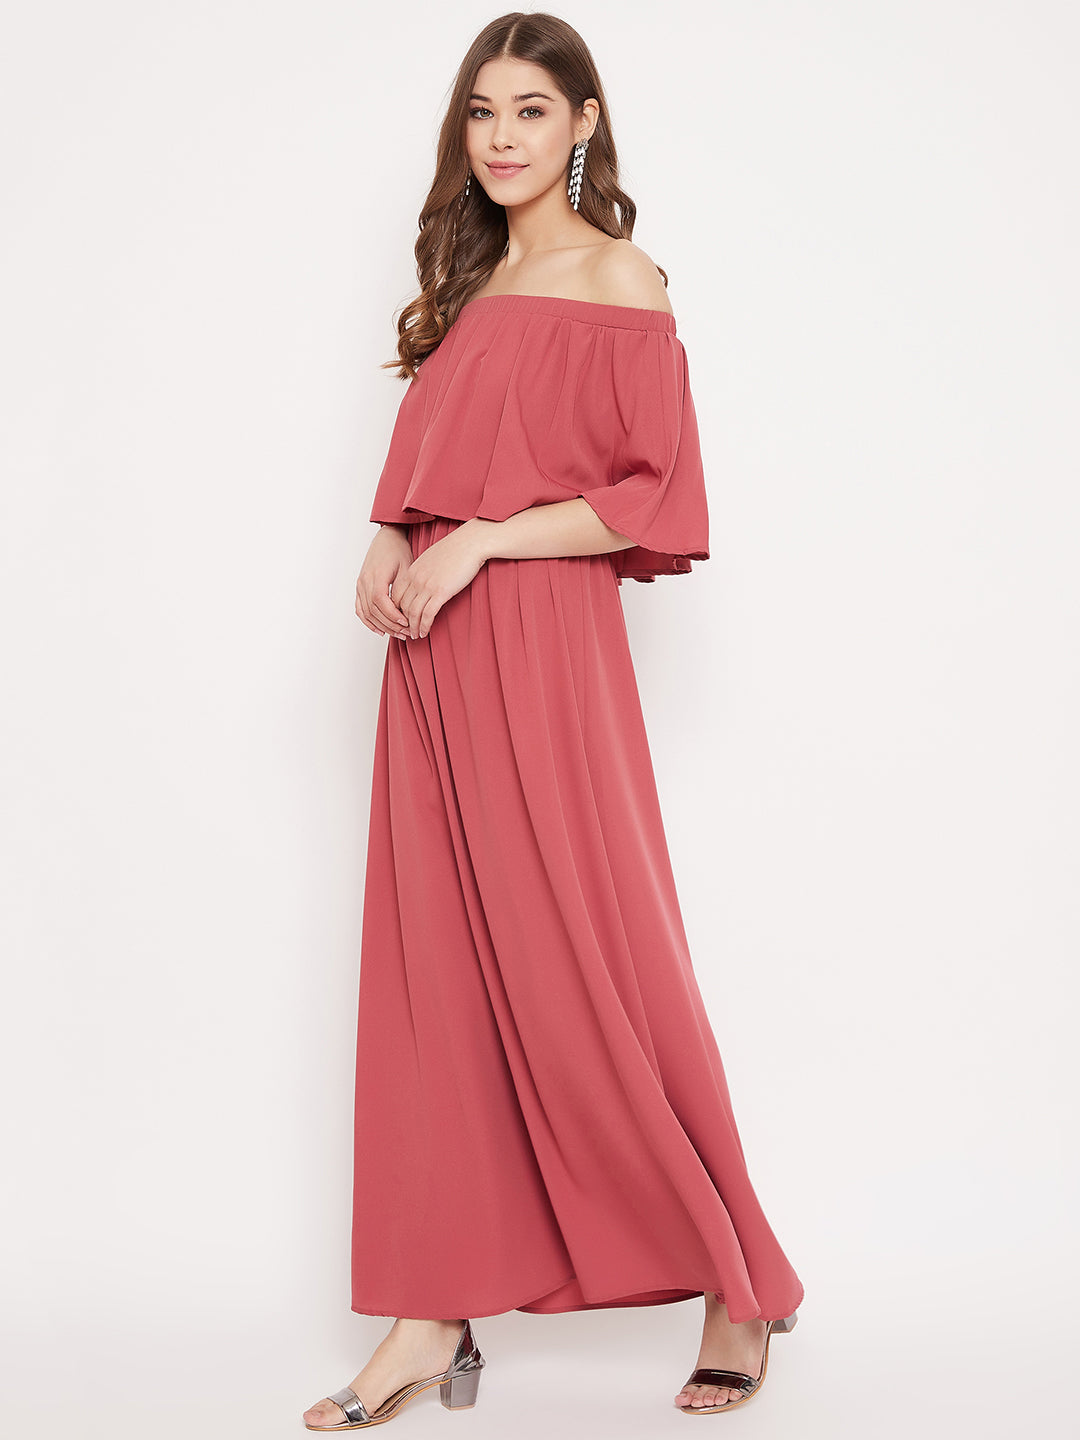 Berrylush Women Solid Dark Pink Off-Shoulder Neck Three-Quarter Sleeves Crepe Flared Maxi Dress